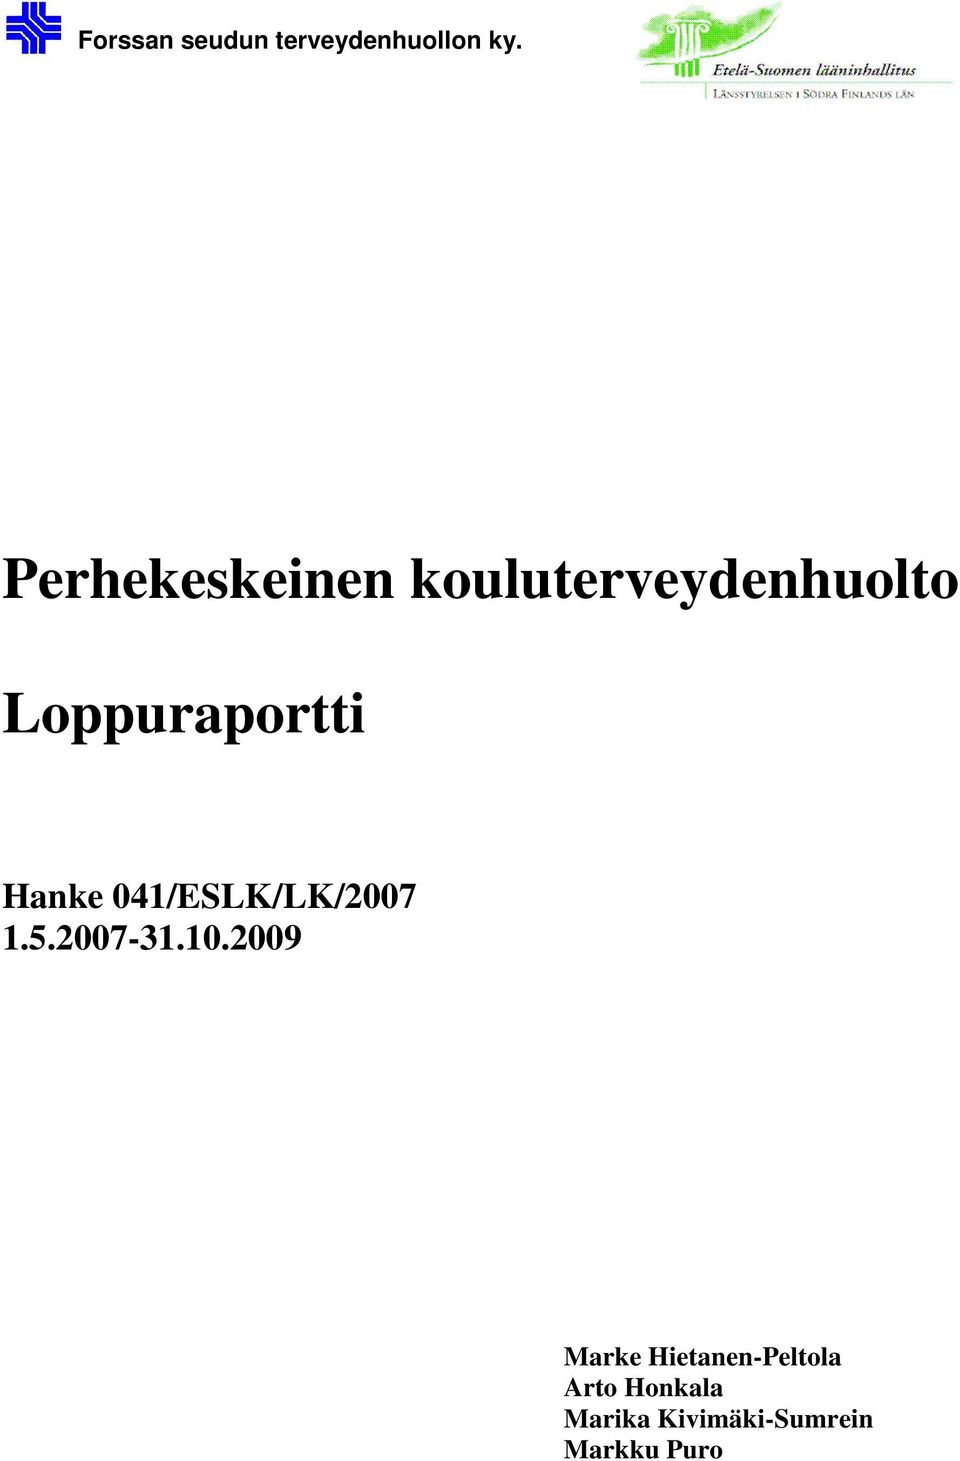 Hanke 041/ESLK/LK/2007 1.5.2007-31.10.